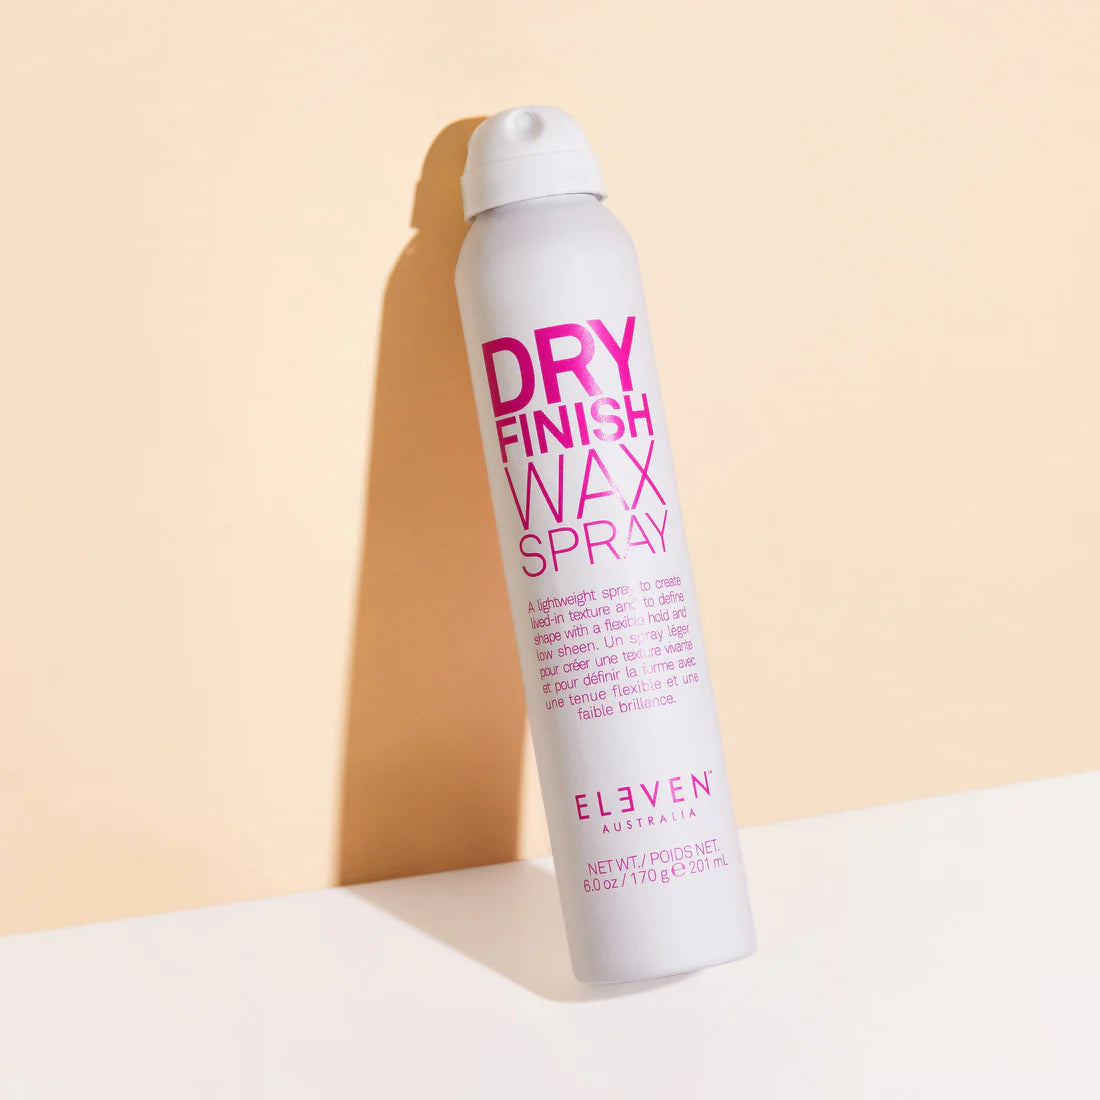 Eleven Australia dry finish wax spray